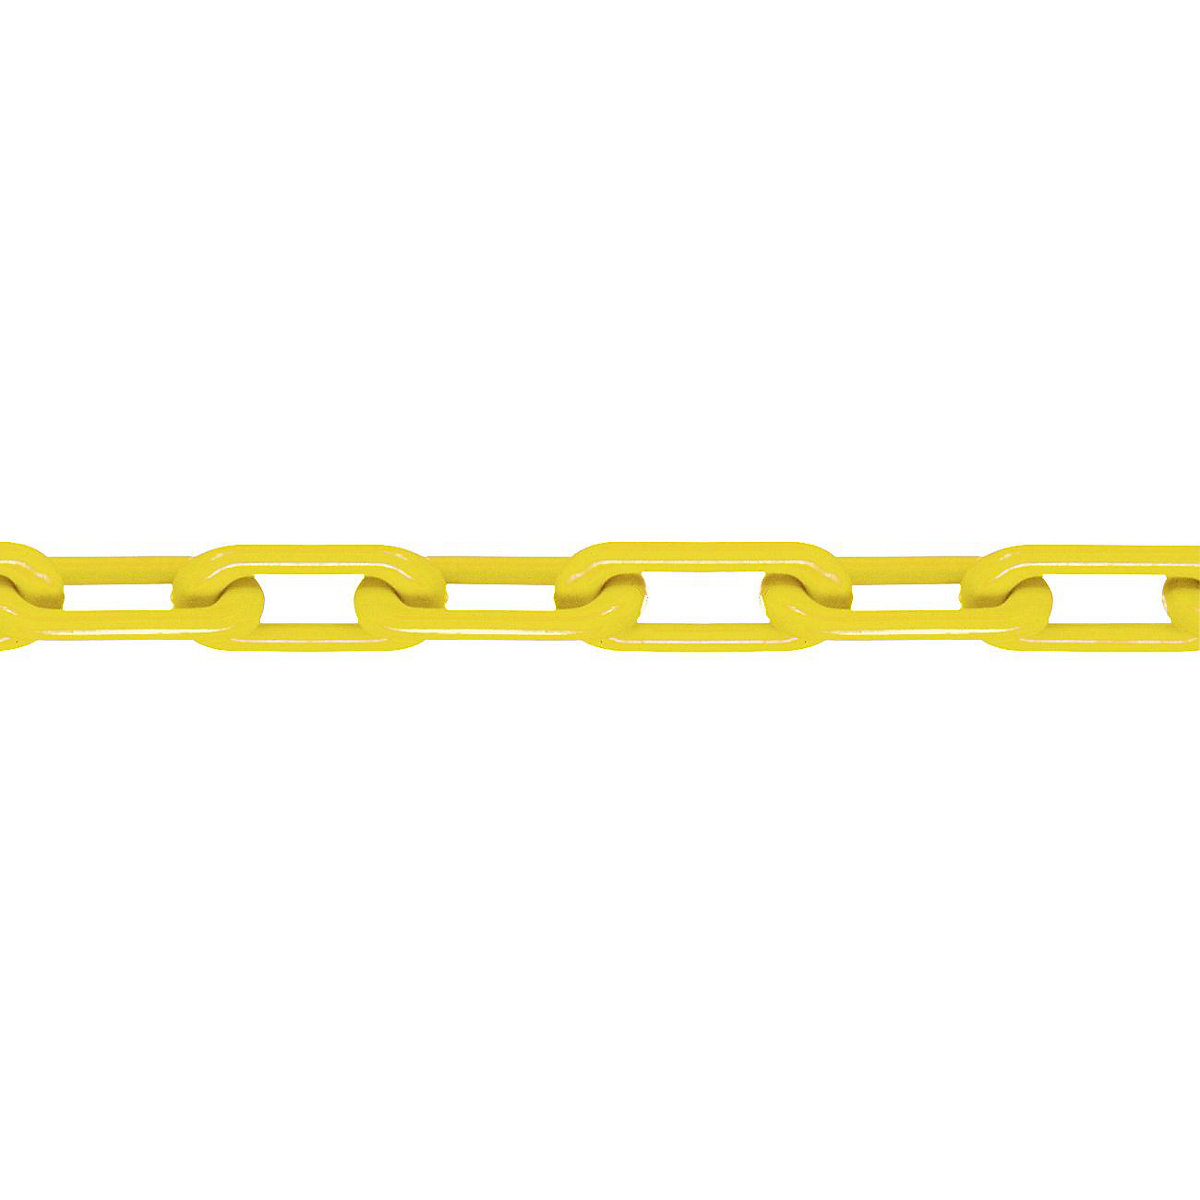 Nylon-kwaliteitsketting, MNK-kwaliteit 8, lengte 25 m, geel-3